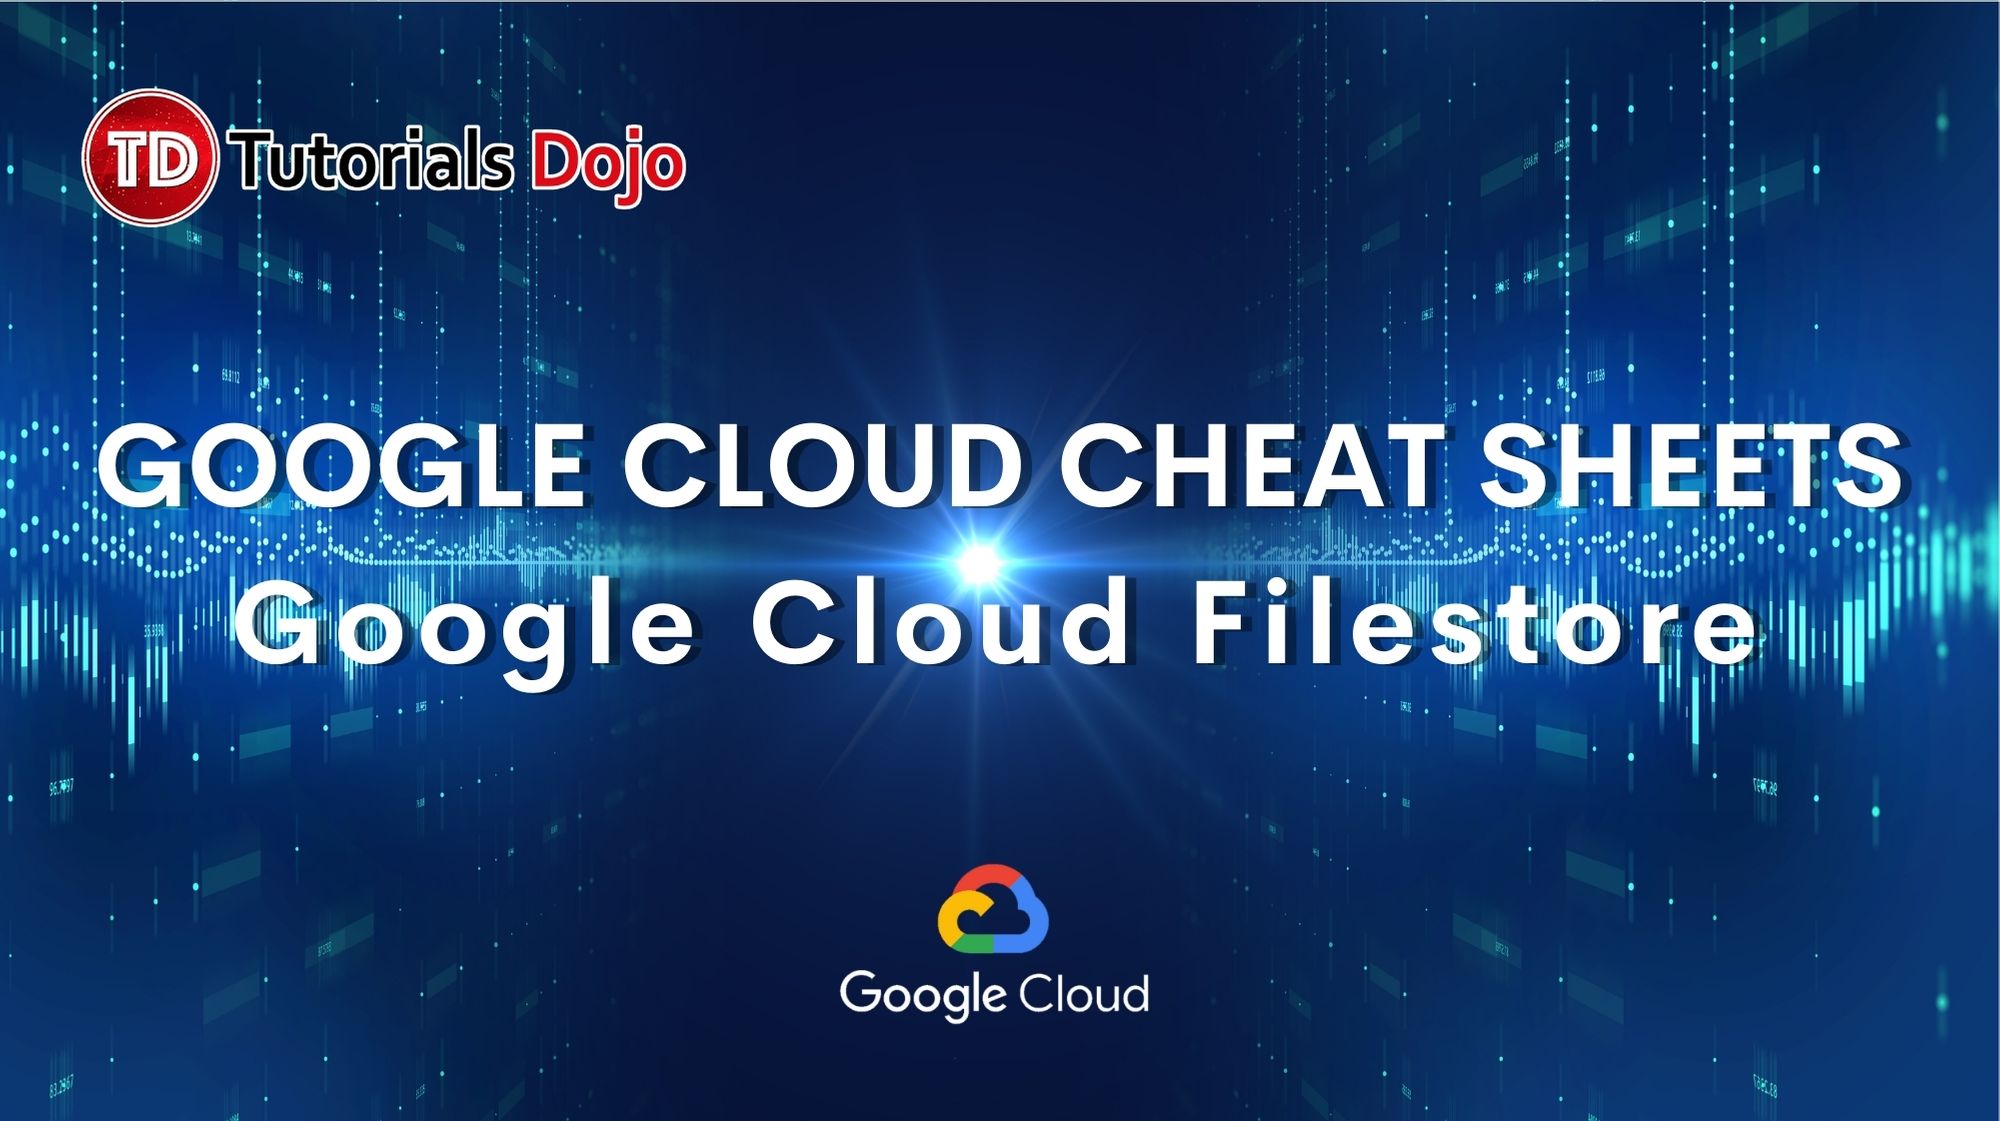 Google Cloud Filestore Cheat Sheet